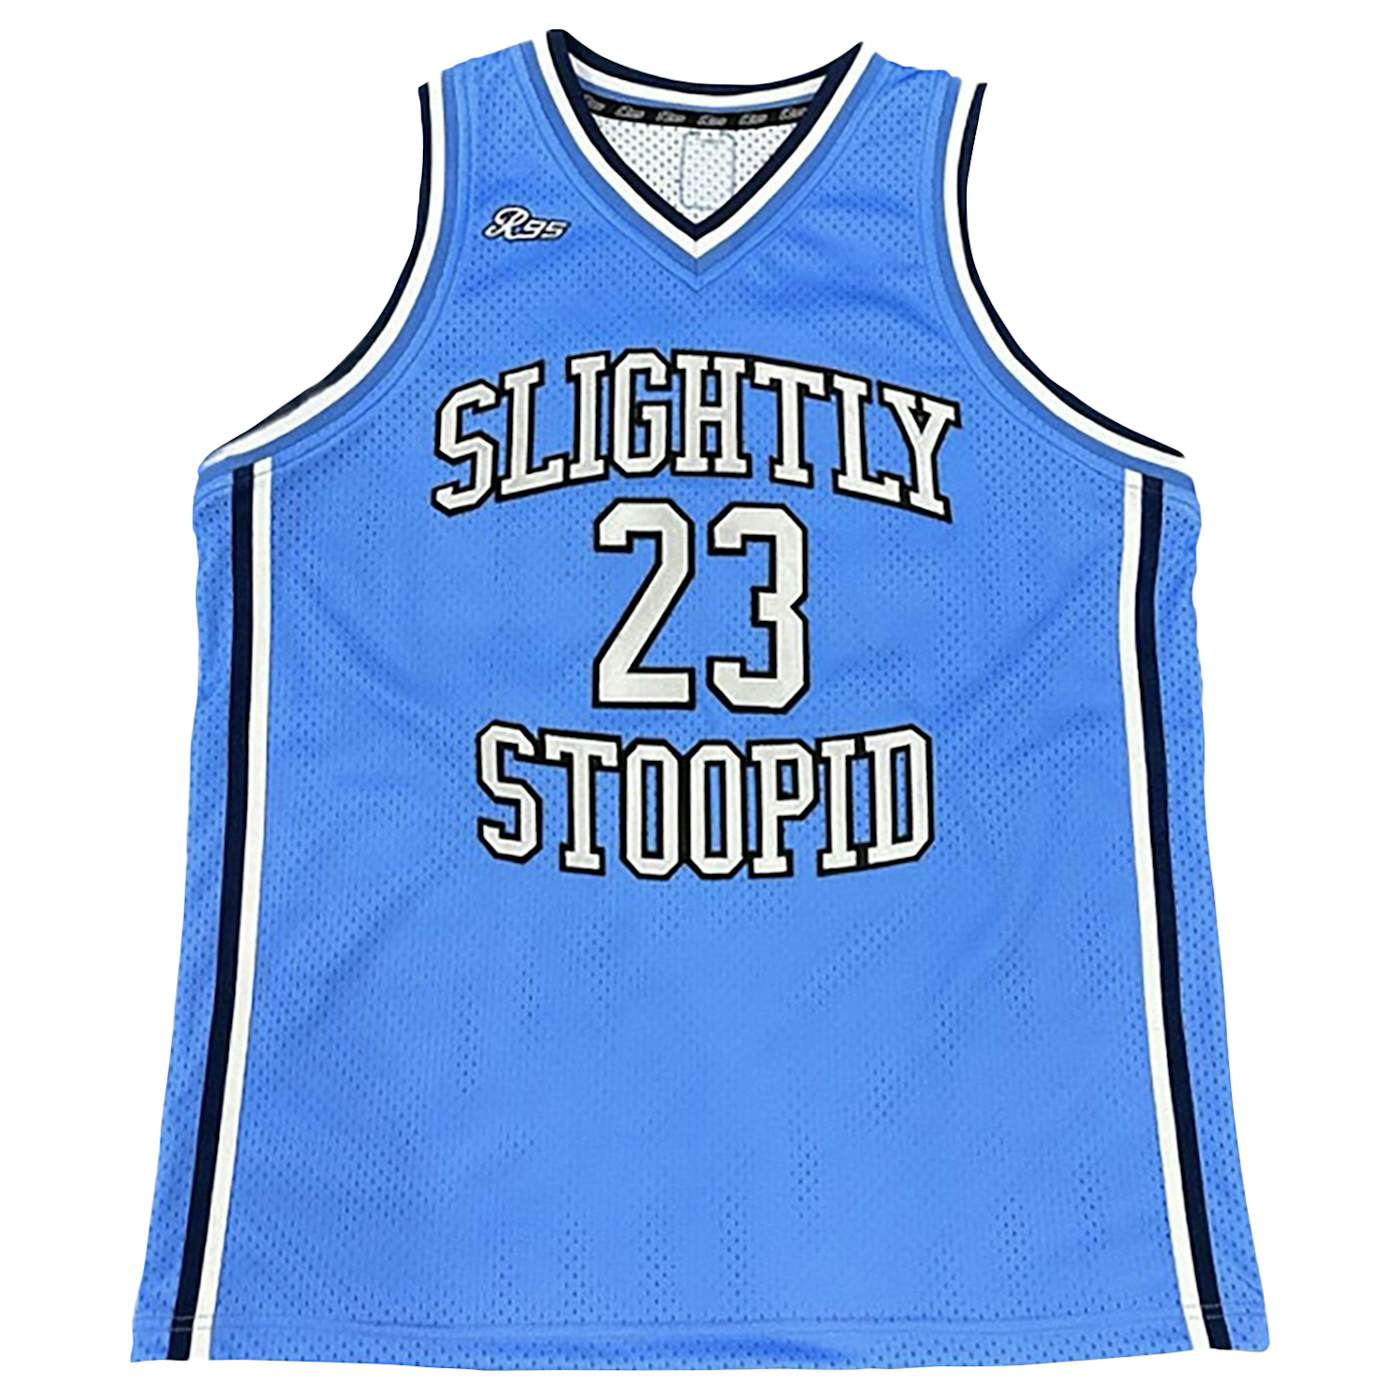 Slightly Stoopid Summertime ‘23 Basketball Jersey